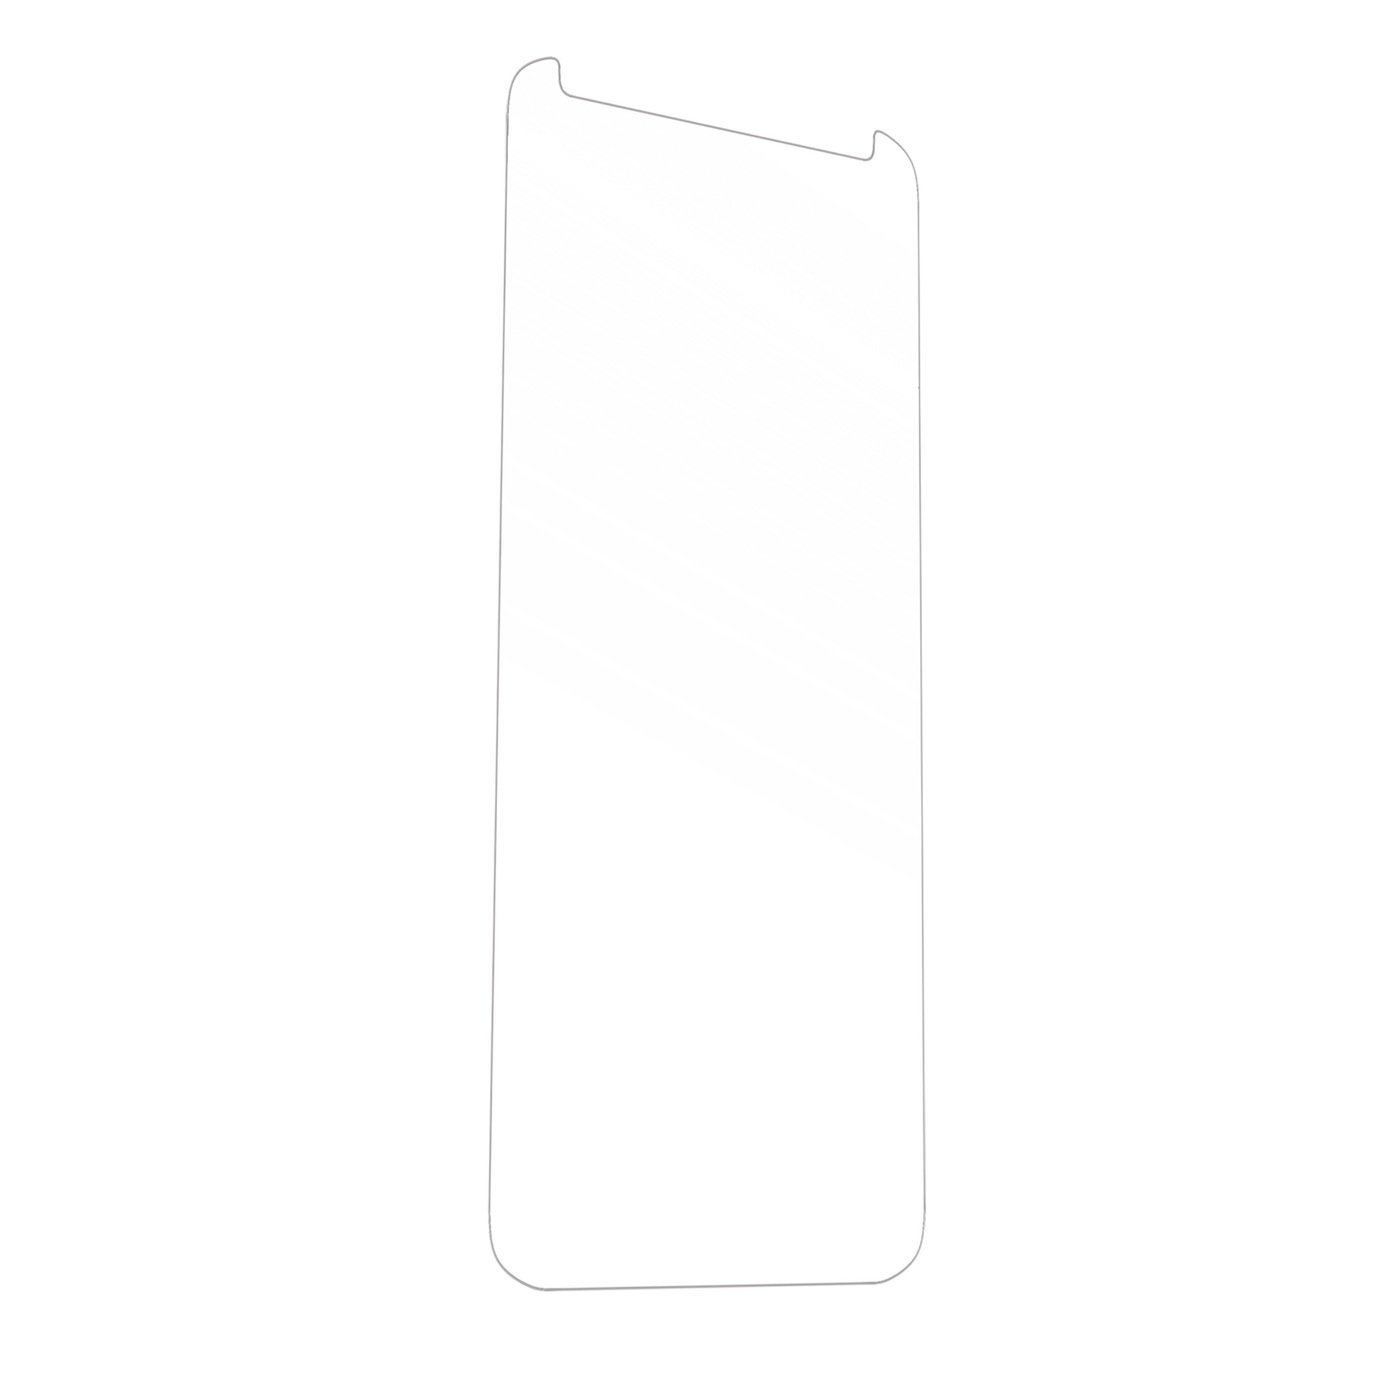 Zagg InvisibleShield Samsung Galaxy S8 Screen Protector Review